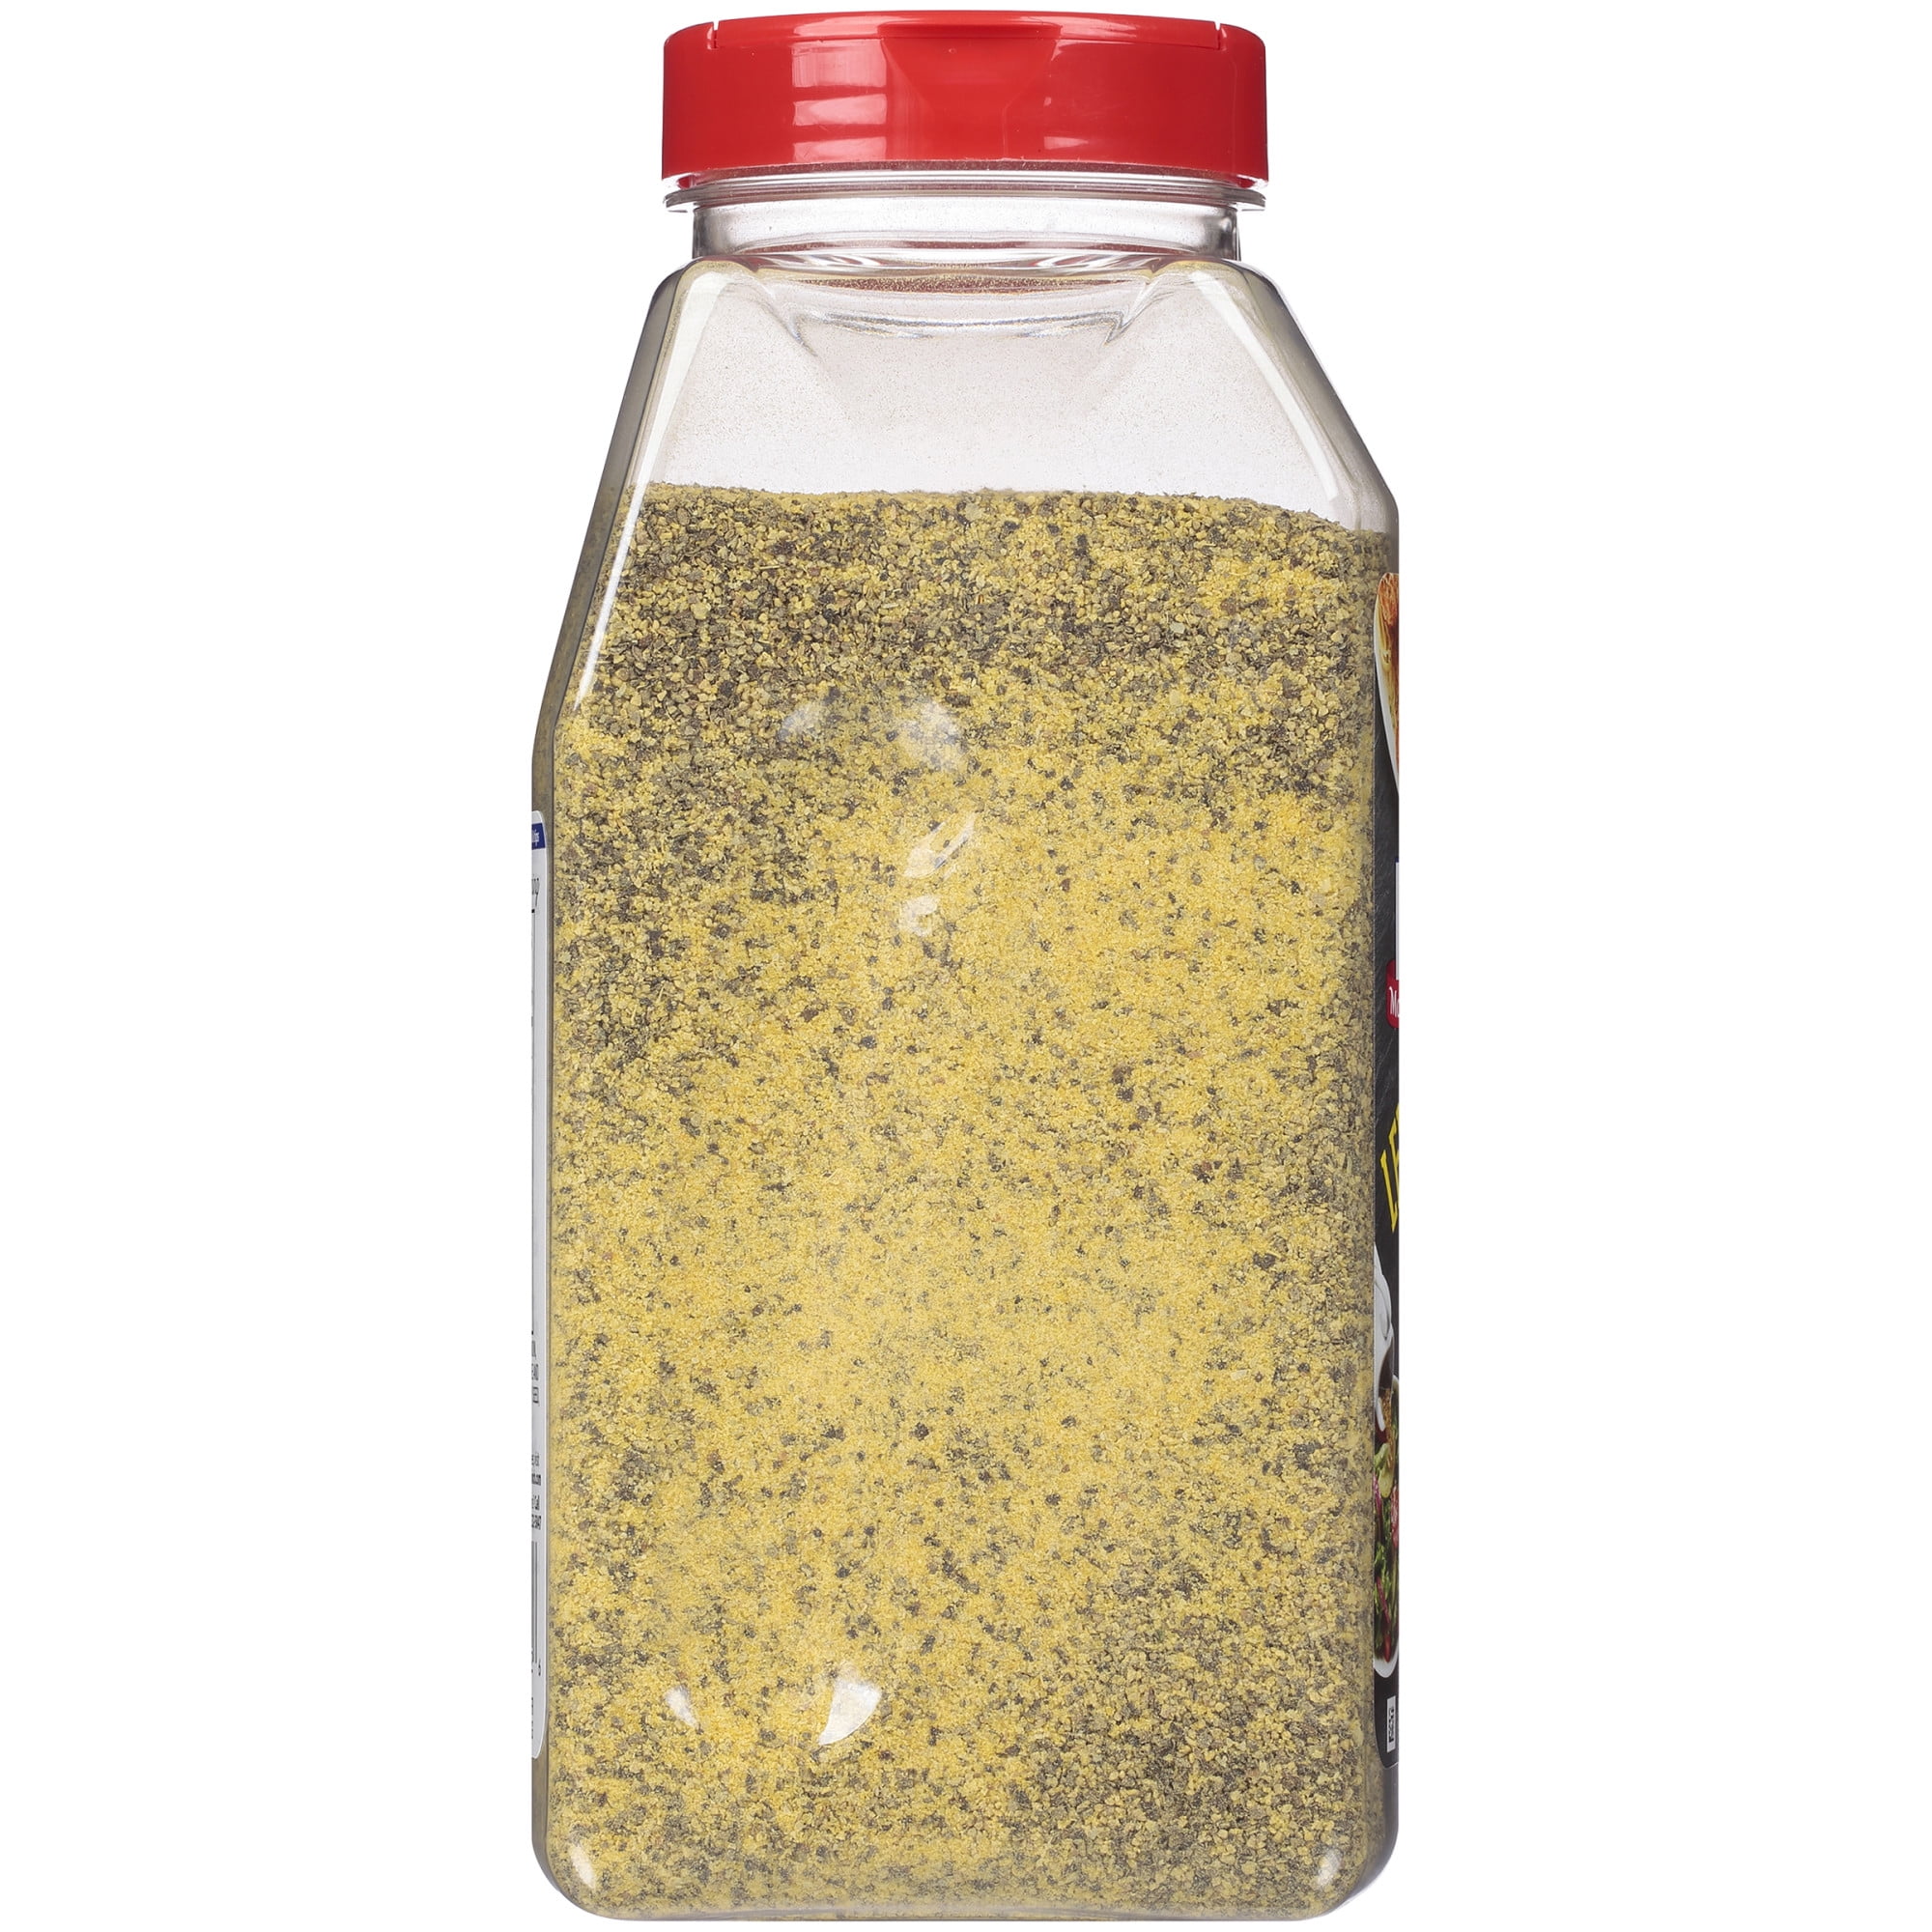 McCormick's New Seasoning Blends in Lemon Pepper Seasoning, Garlic Salt,  Cinnamon Sugar, Cajun Seasoning, and Chili Lime Seasoning are…